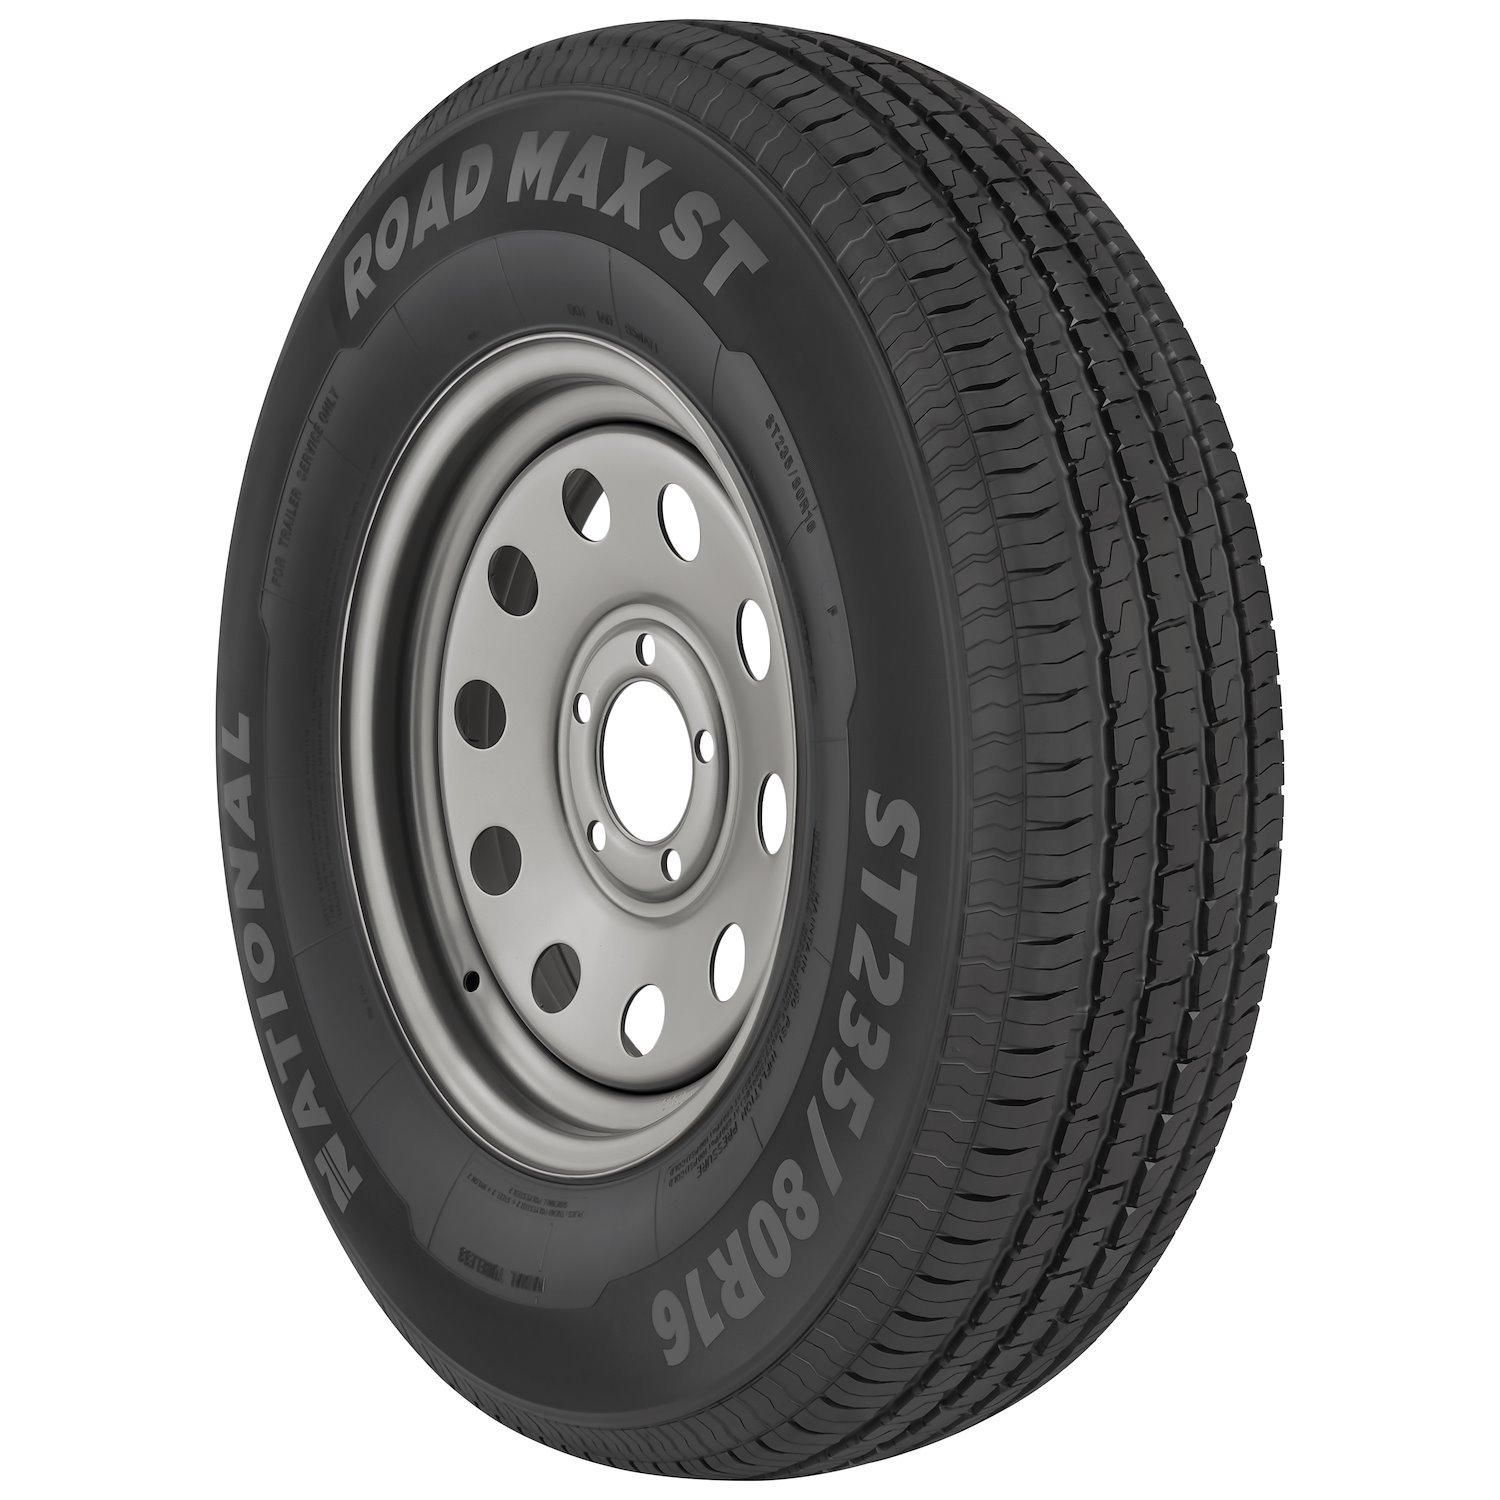 NRM18 Road MAX ST Tire, ST235/85R16